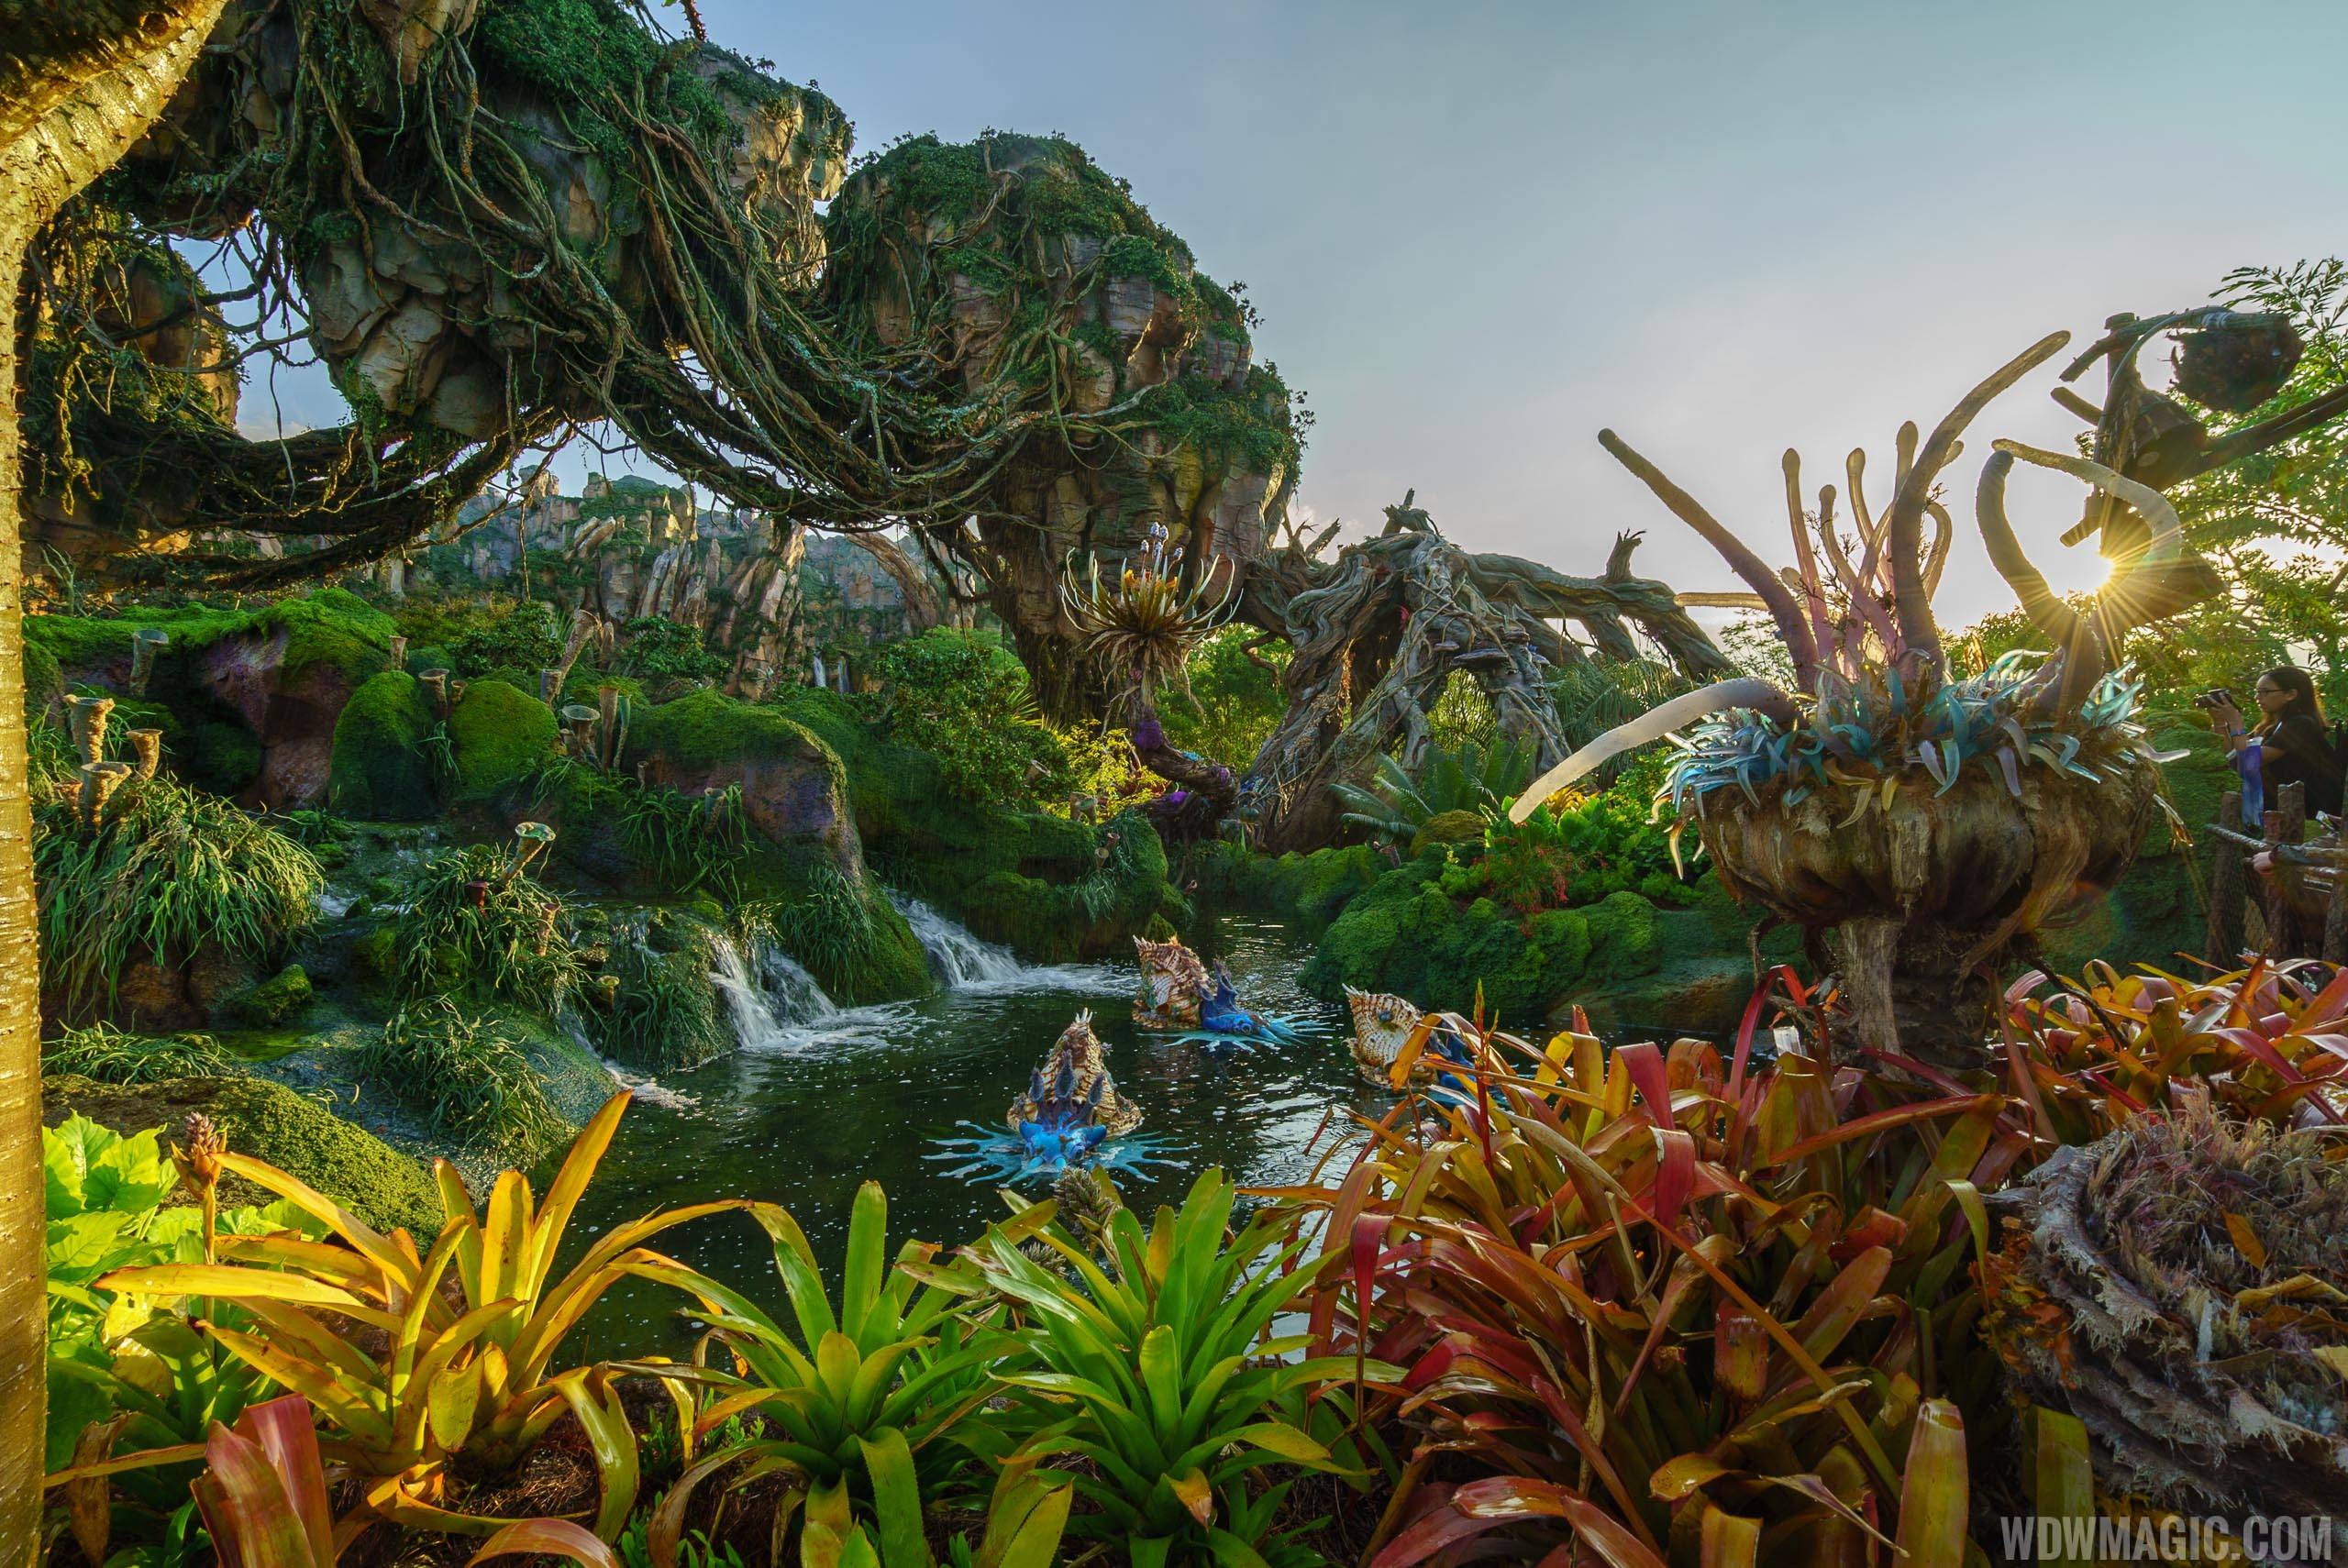 Longer hours at Animal Kingdom mean more spectacular views of Pandora